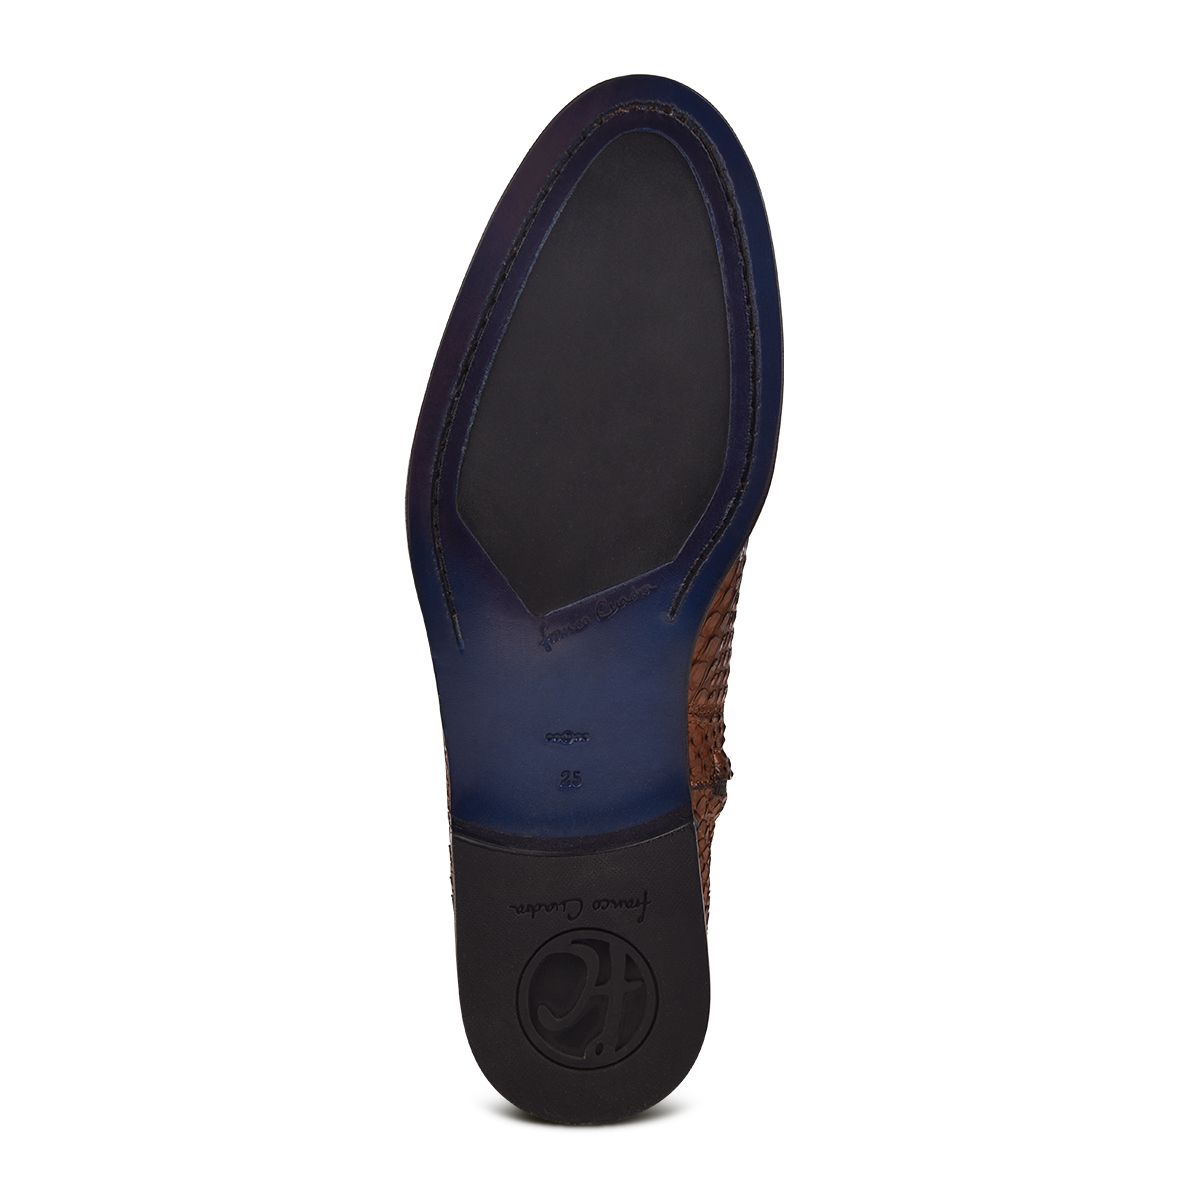 71TPMTV - Cuadra brown casual fashion python boots for women-FRANCO CUADRA-Kuet-Cuadra-Boots